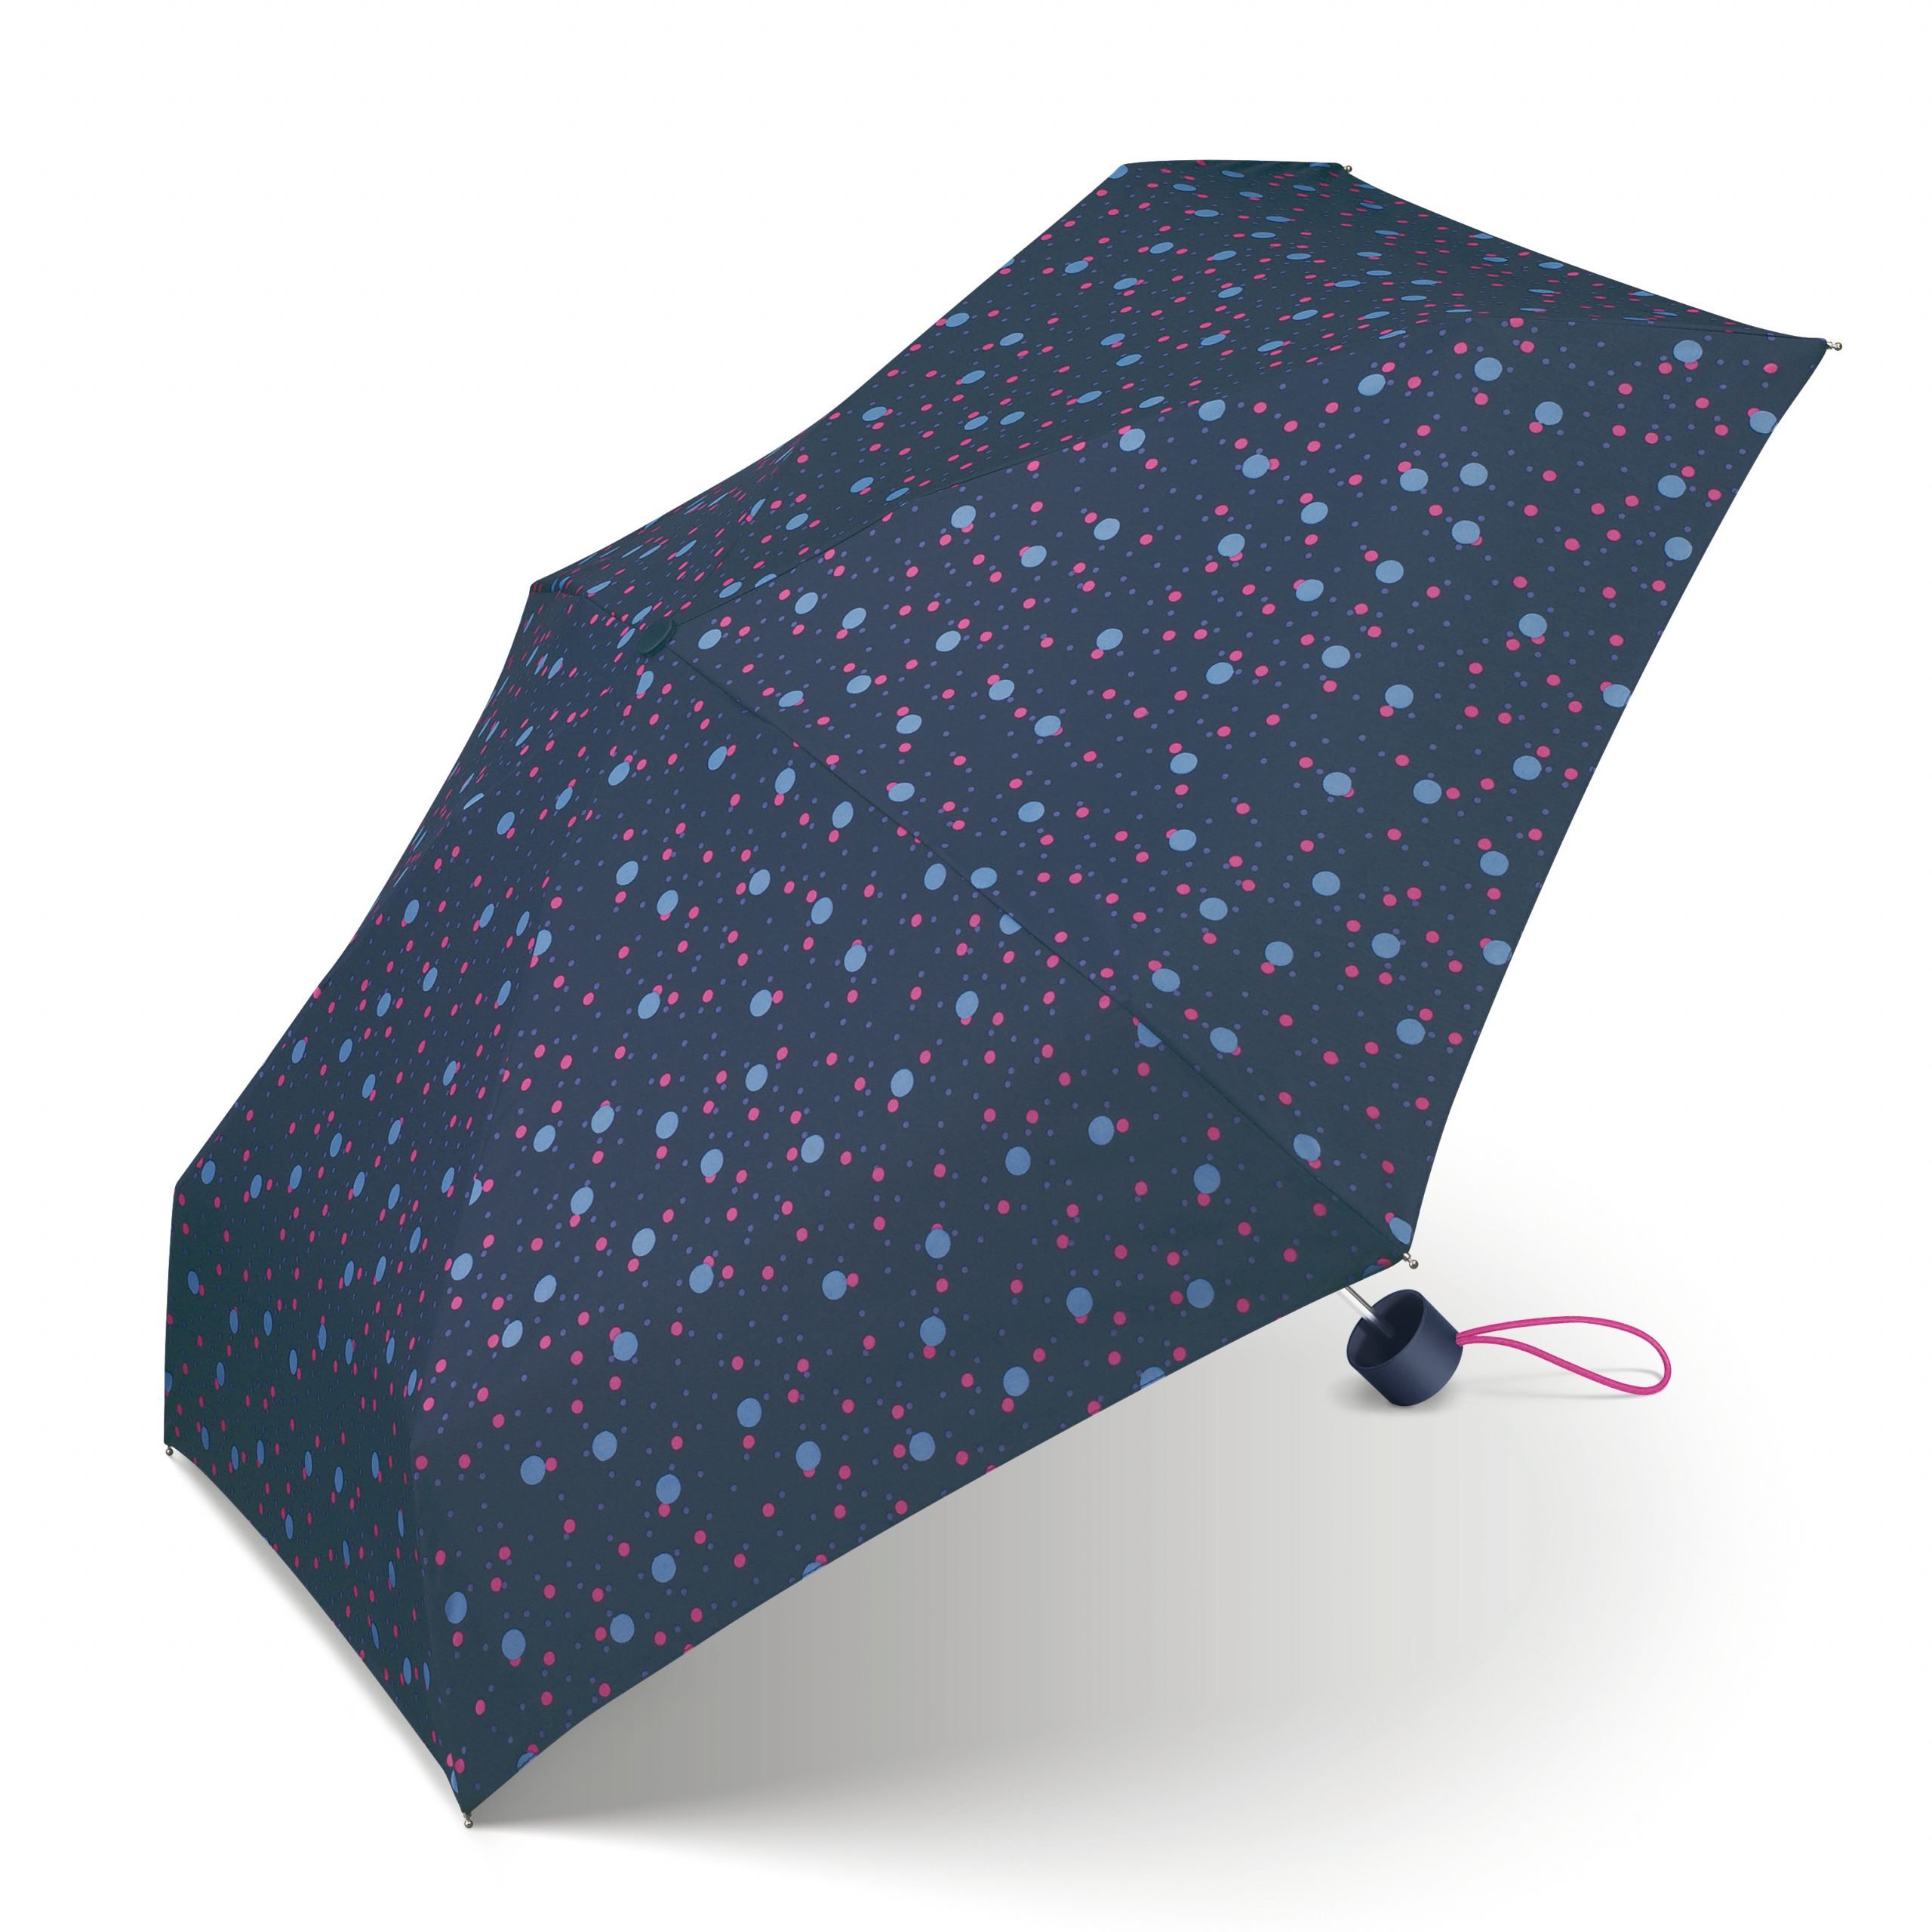 Paraguas plegable Esprit Burbujas Azul - Outlet, Paraguas Esprit, Paraguas Originales, Paraguas plegable Mujer - puedo